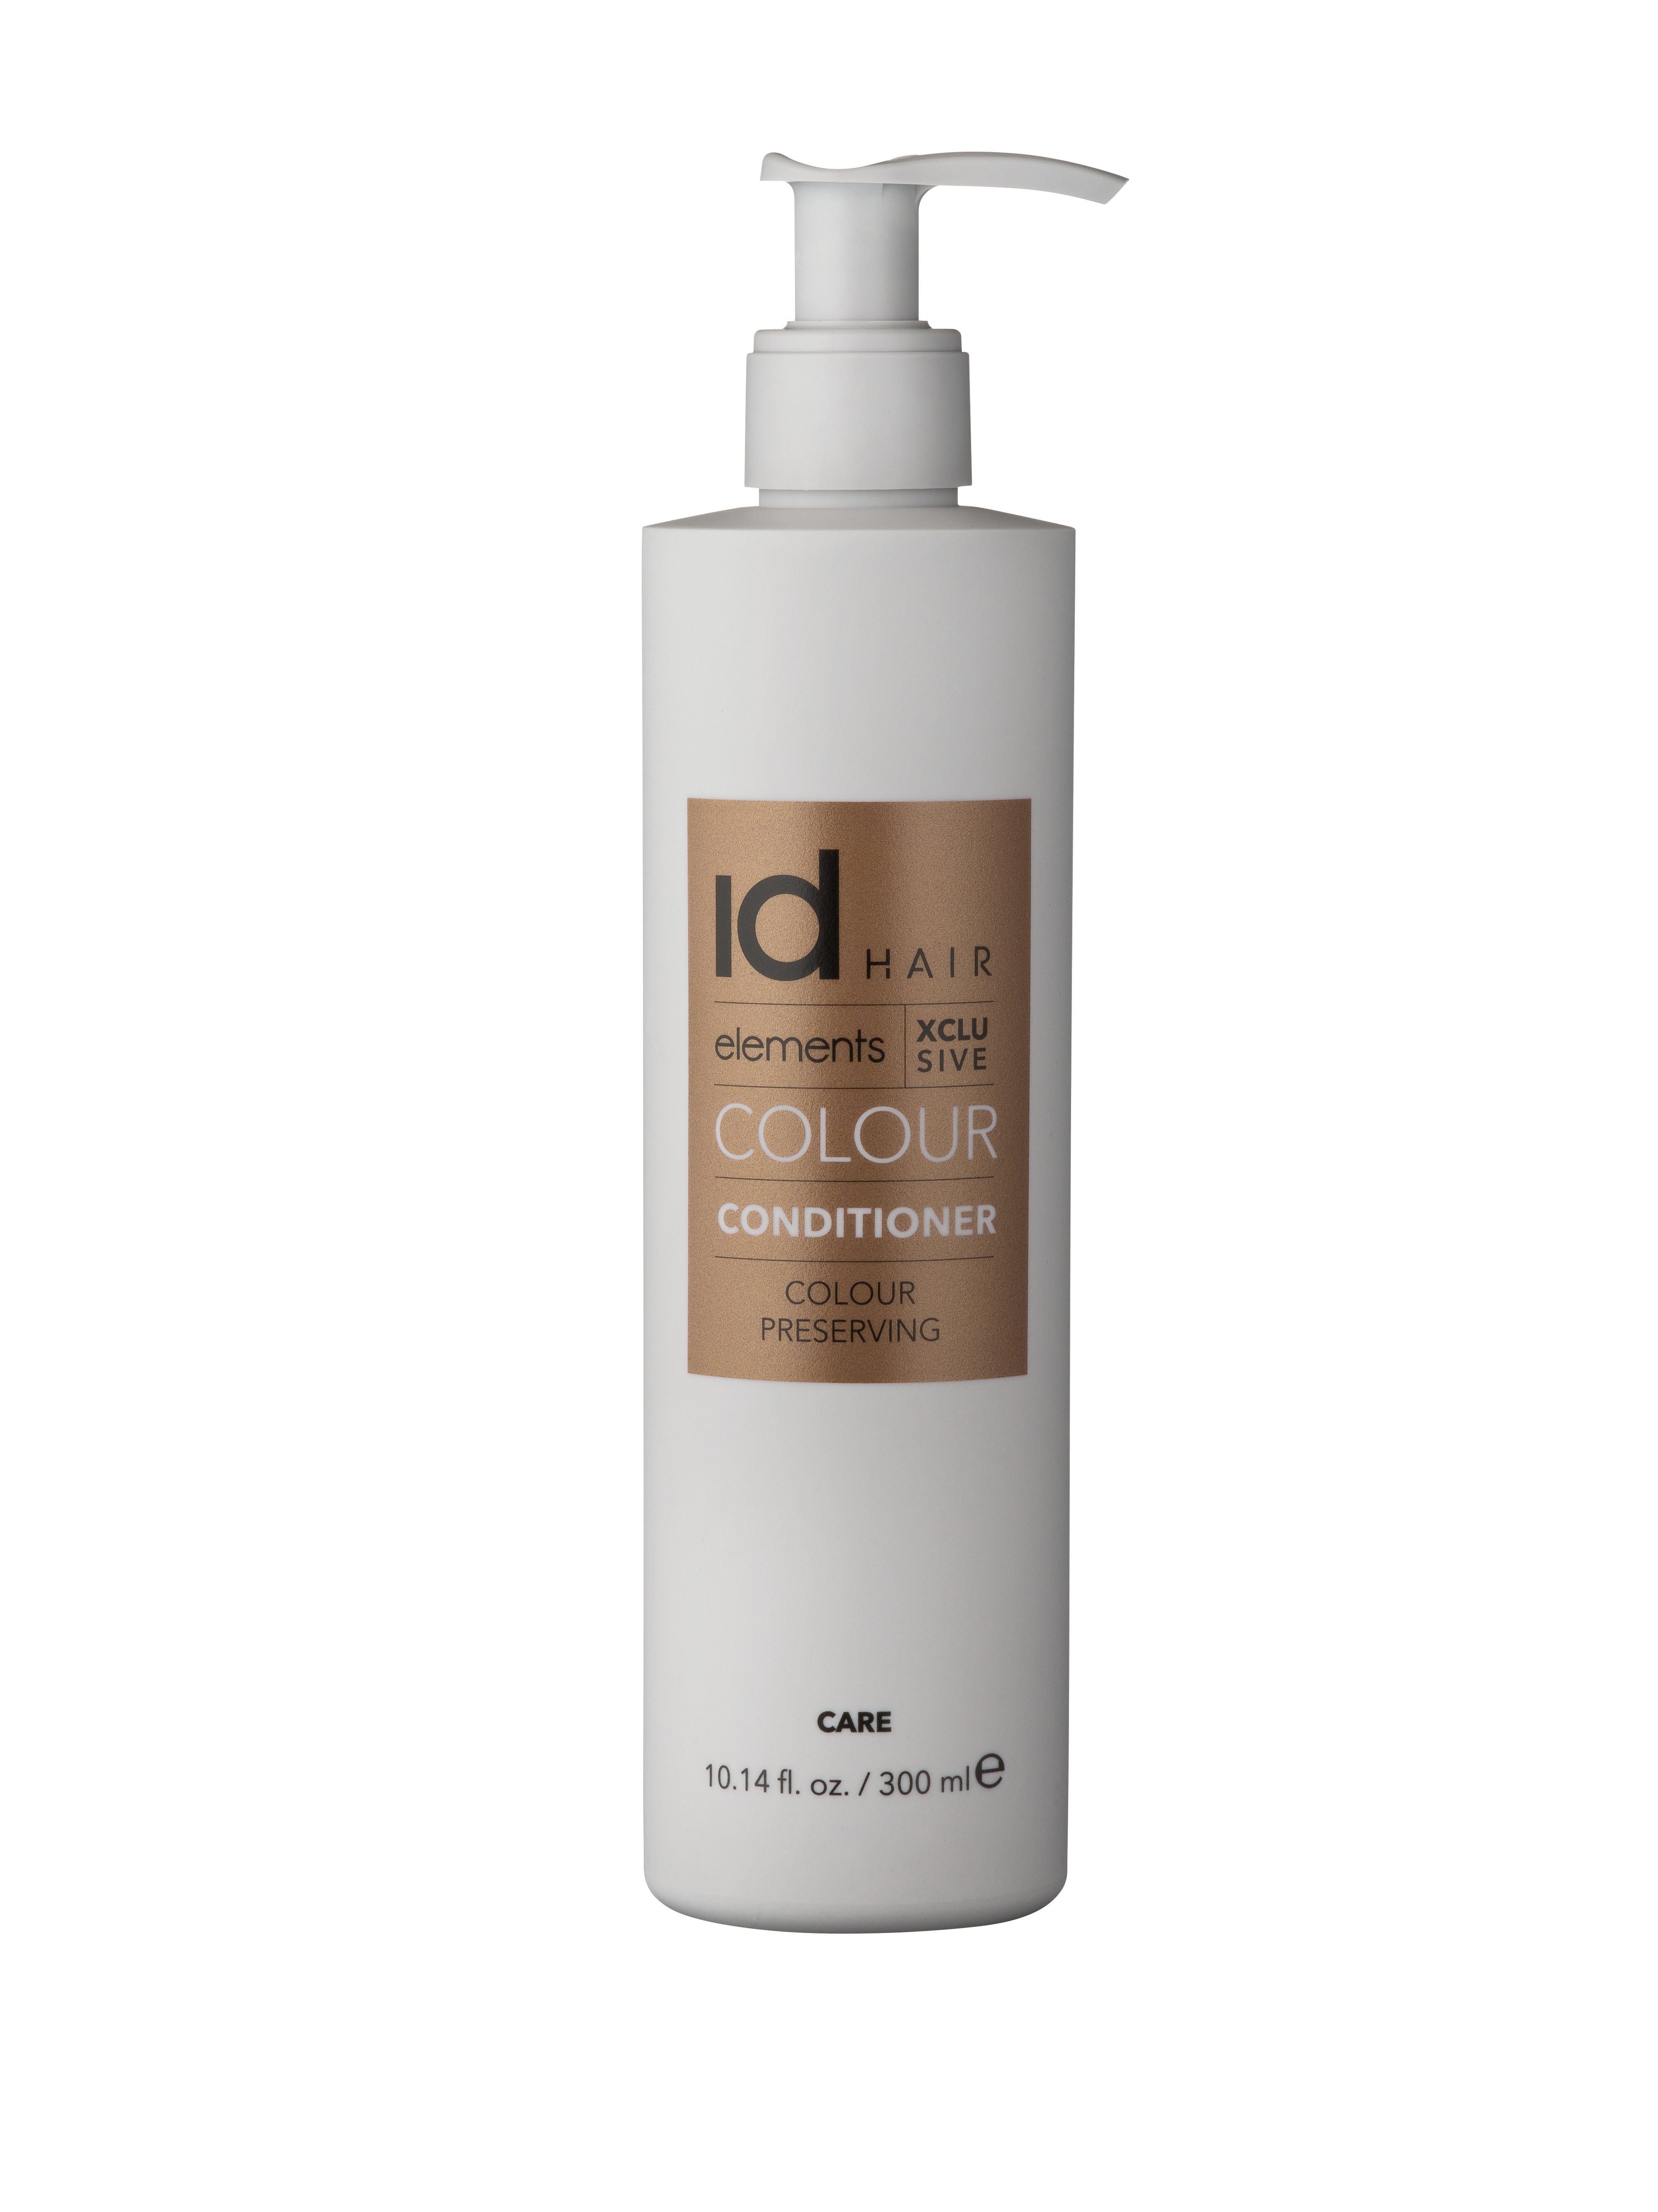 IdHAIR - Elements Xclusive Colour Conditioner 300 ml